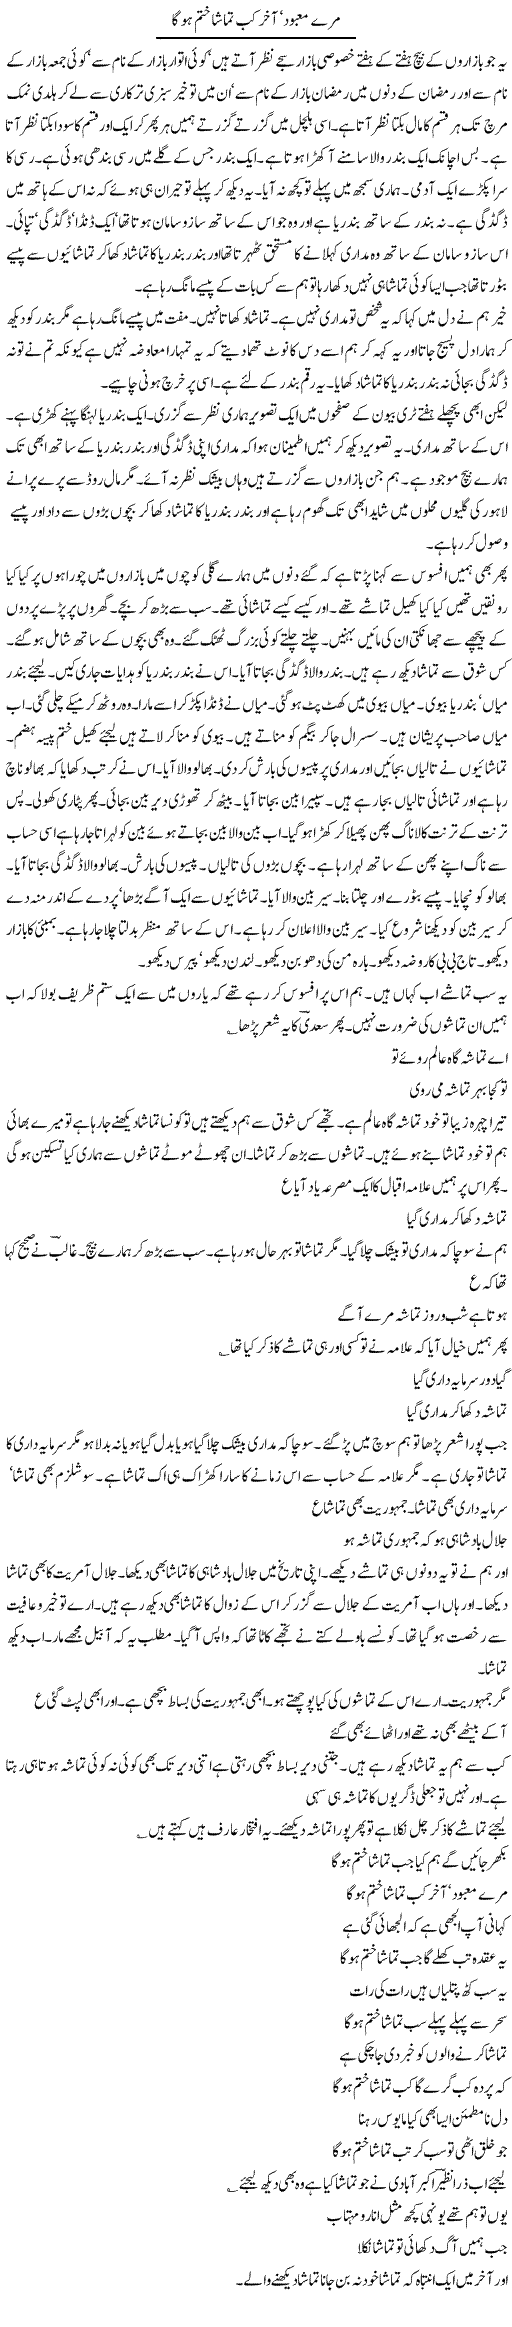 Mare Mabood Aakhir Kab Tamasha Khatam Hoga | Intizar Hussain | Daily Urdu Columns